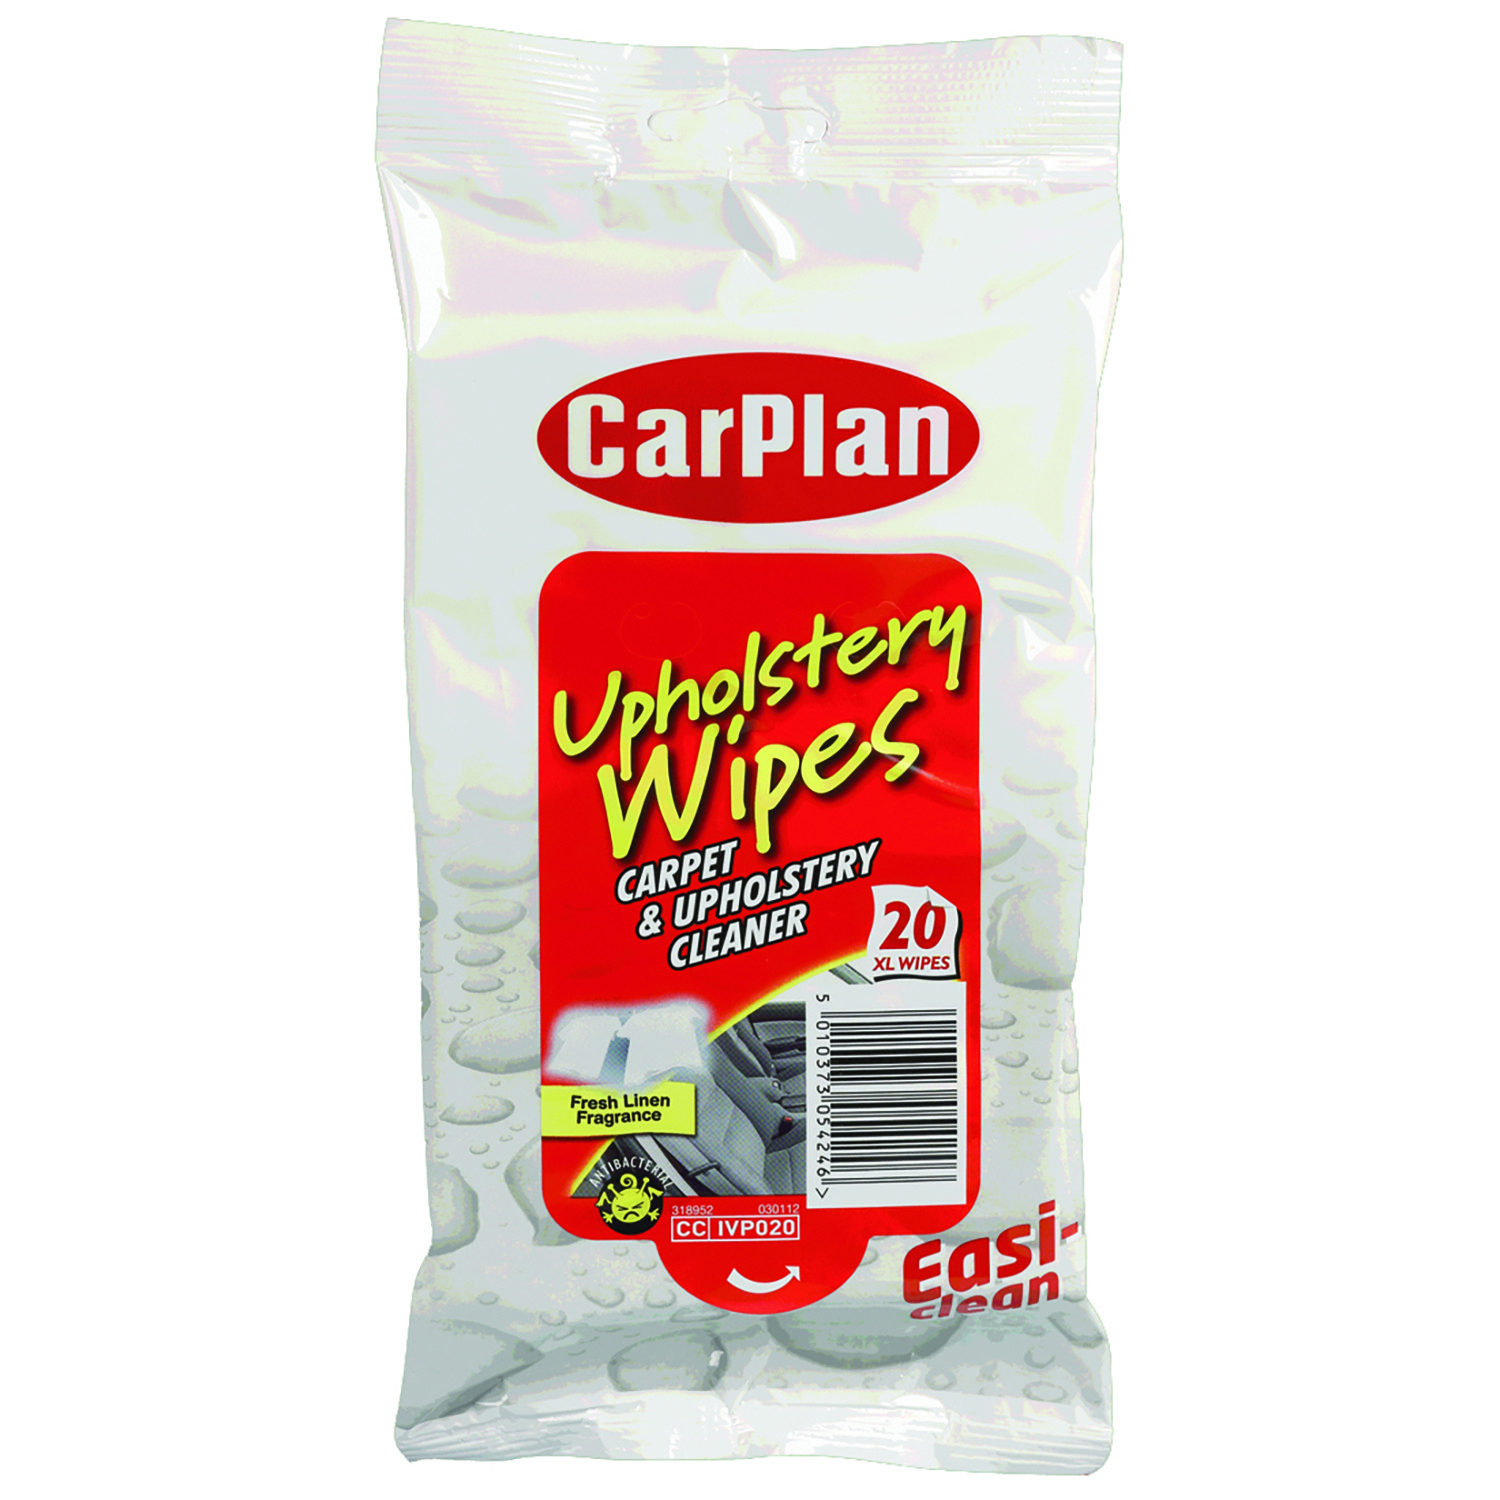 CarPlan Upholstery XL Wipes 20 Pack Image